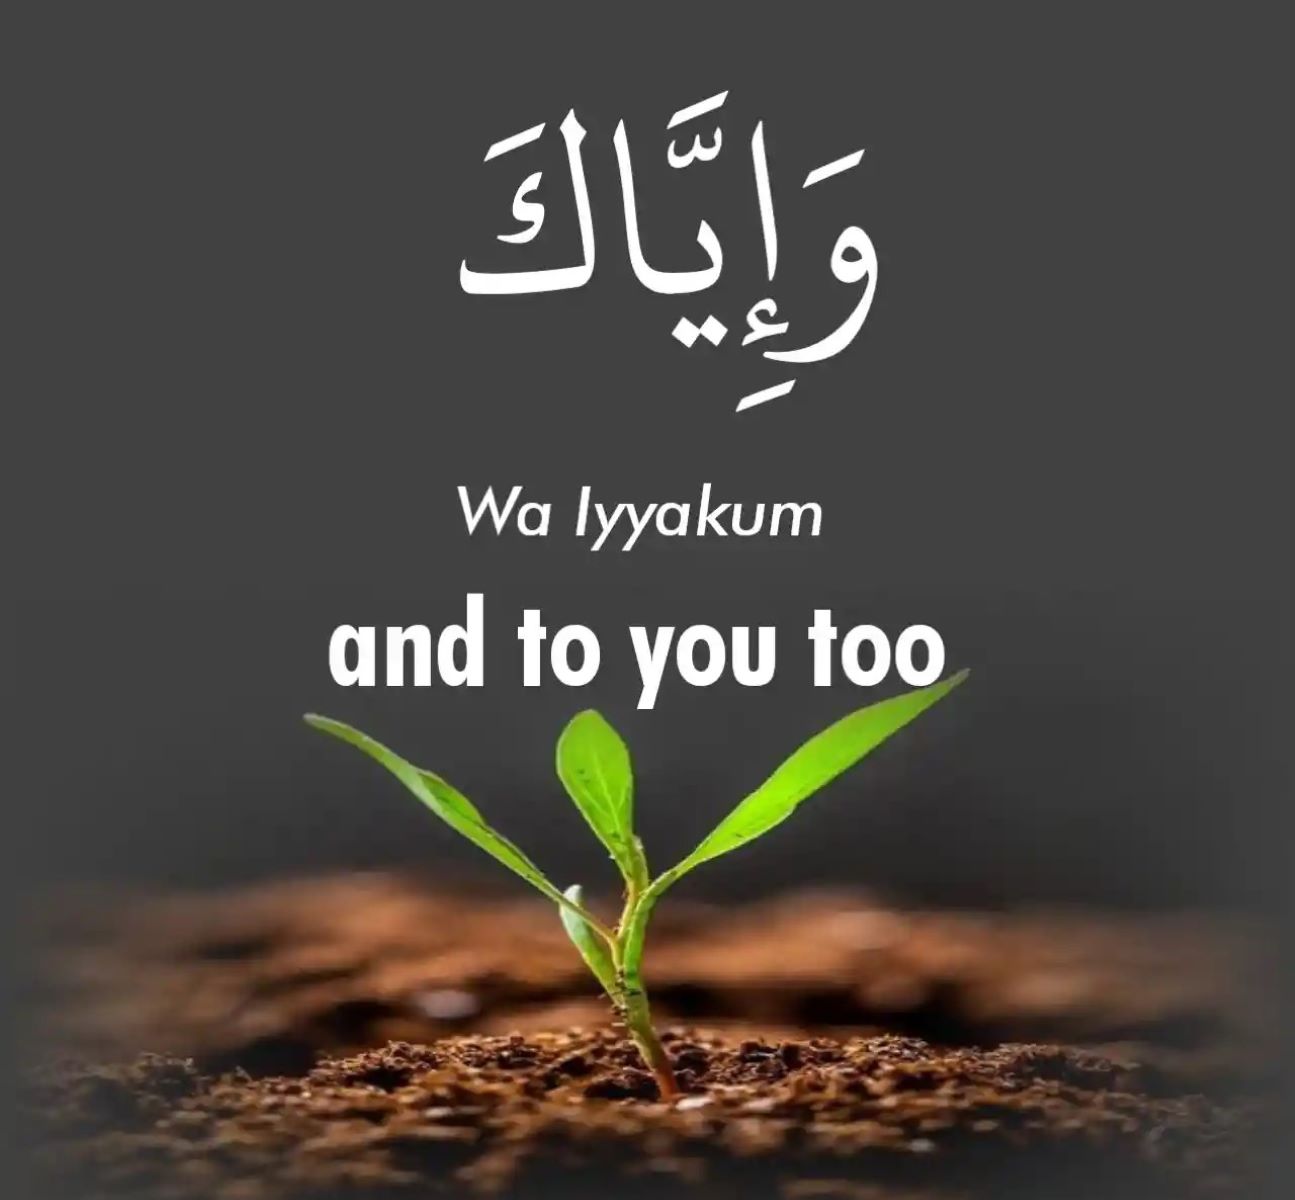 The Meaning And Usage Of 'Wa Iyyakum'